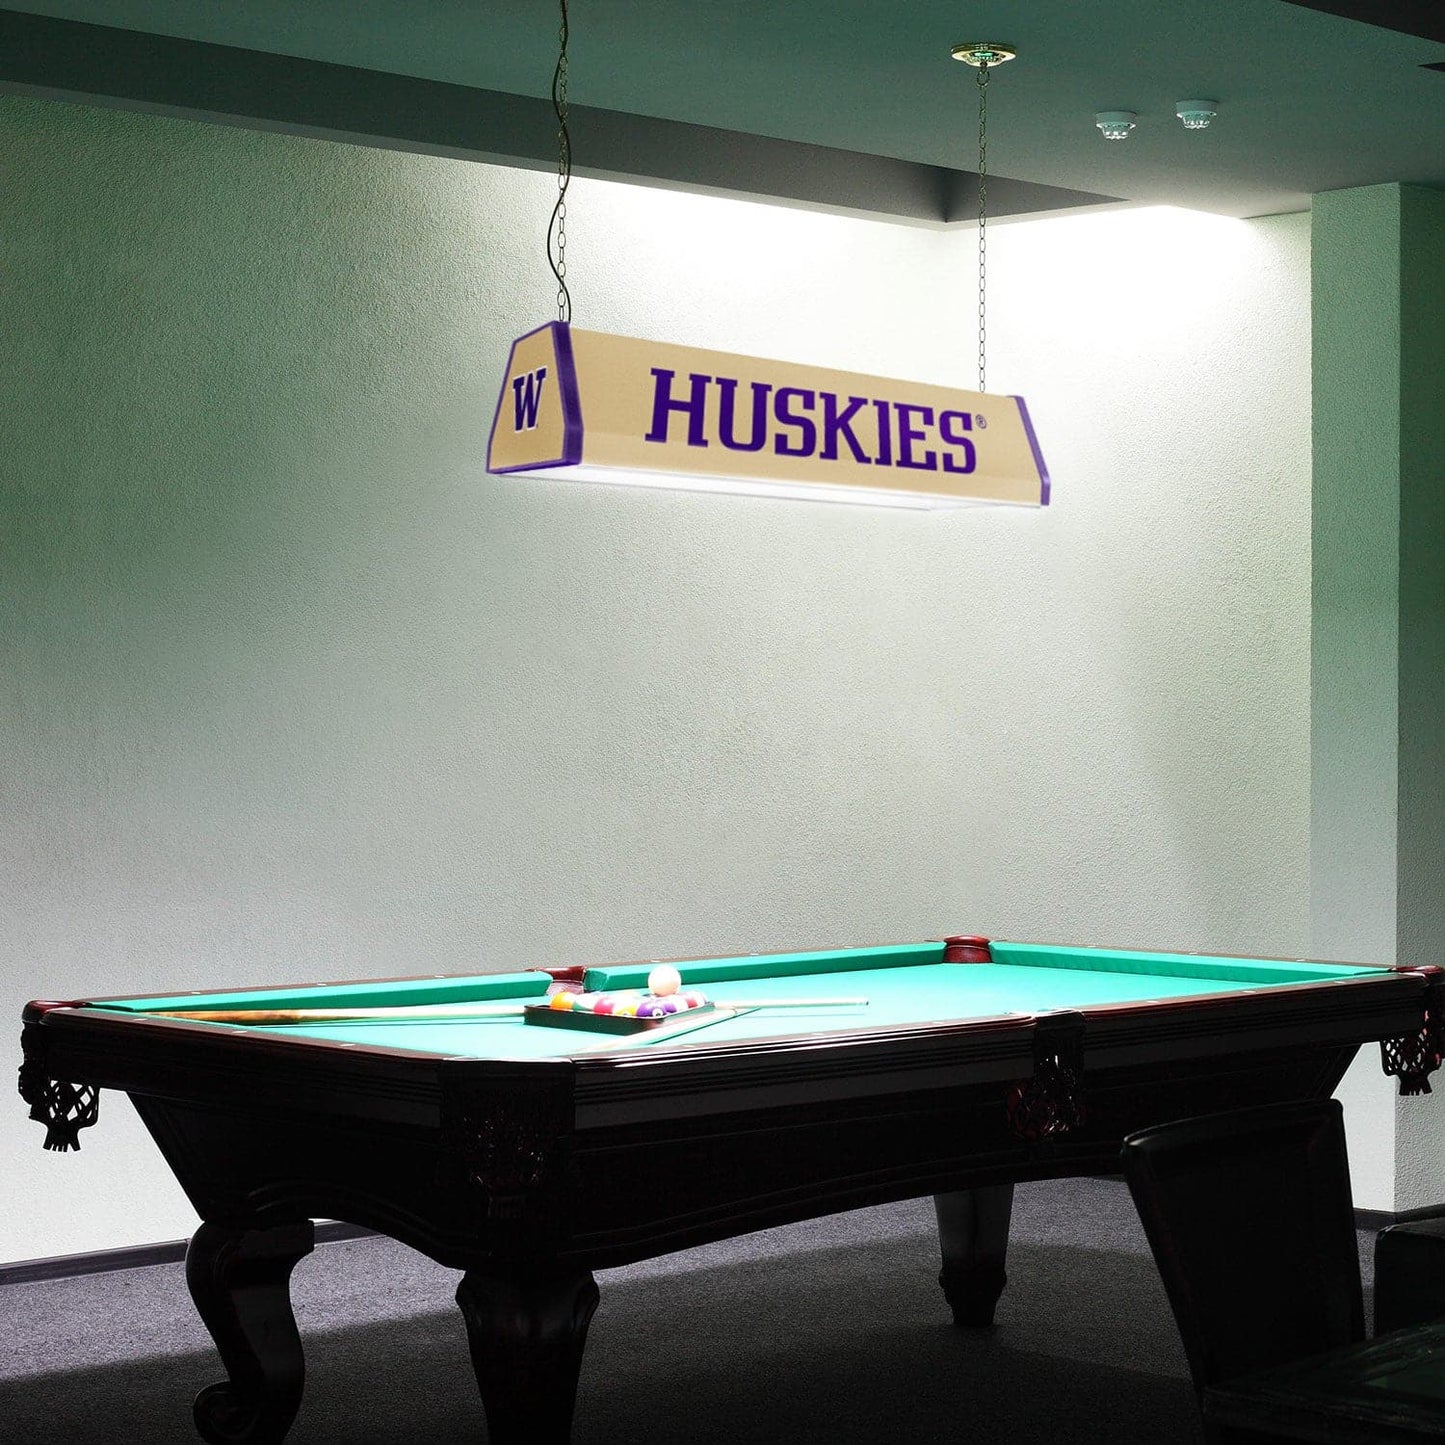 Washington Huskies: Huskies - Standard Pool Table Light - The Fan-Brand